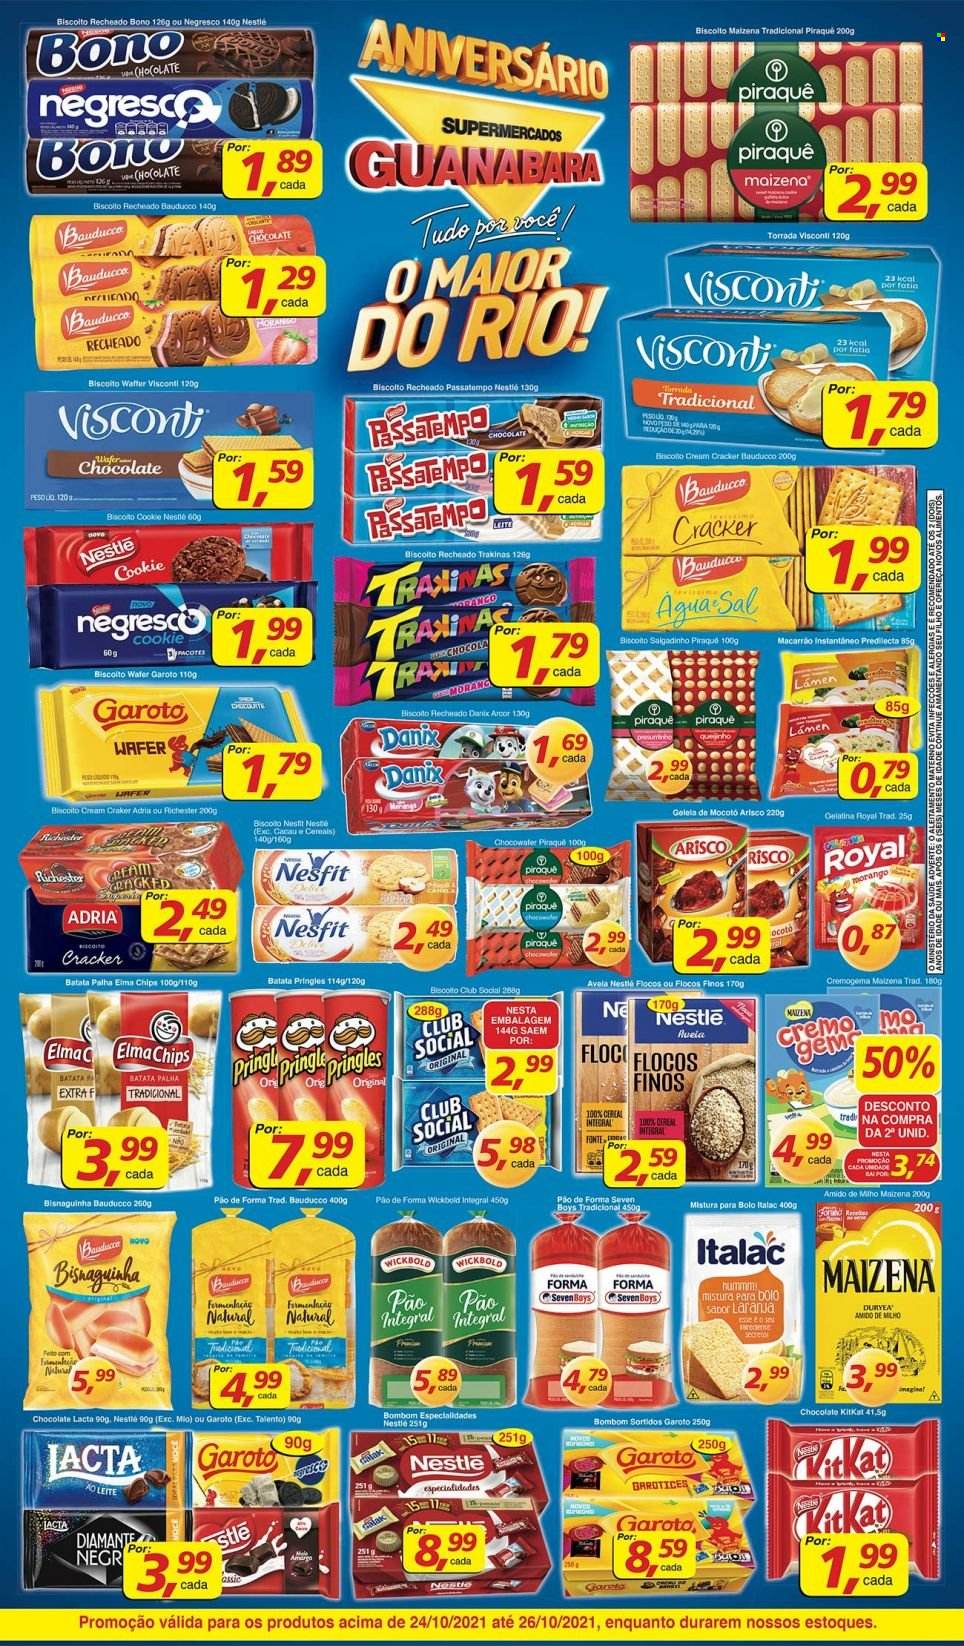 Encarte Supermercados Guanabara  - 24.10.2021 - 26.10.2021.